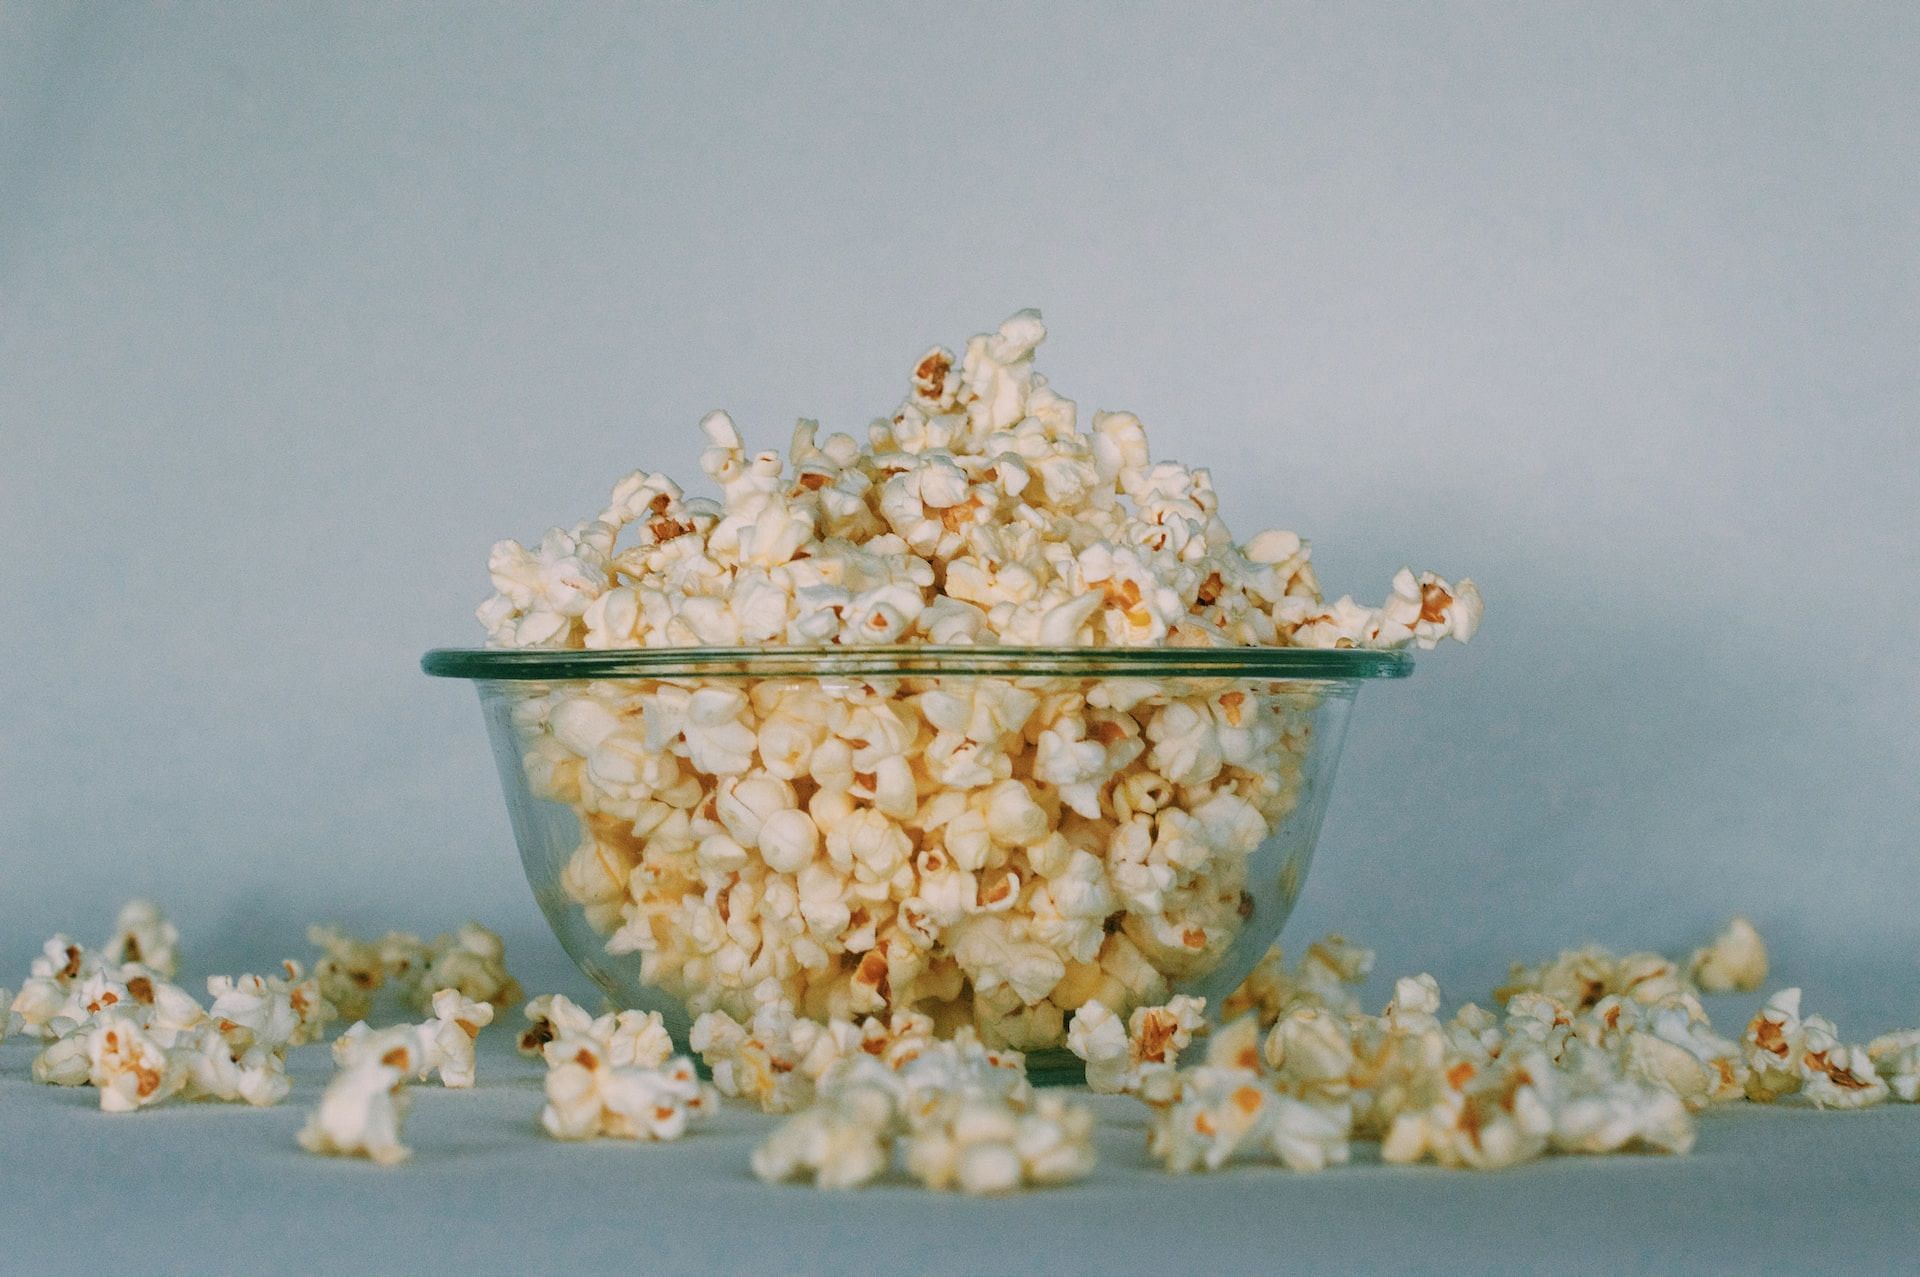 Popcorn (Photo by Georgia Vagim on Unsplash)